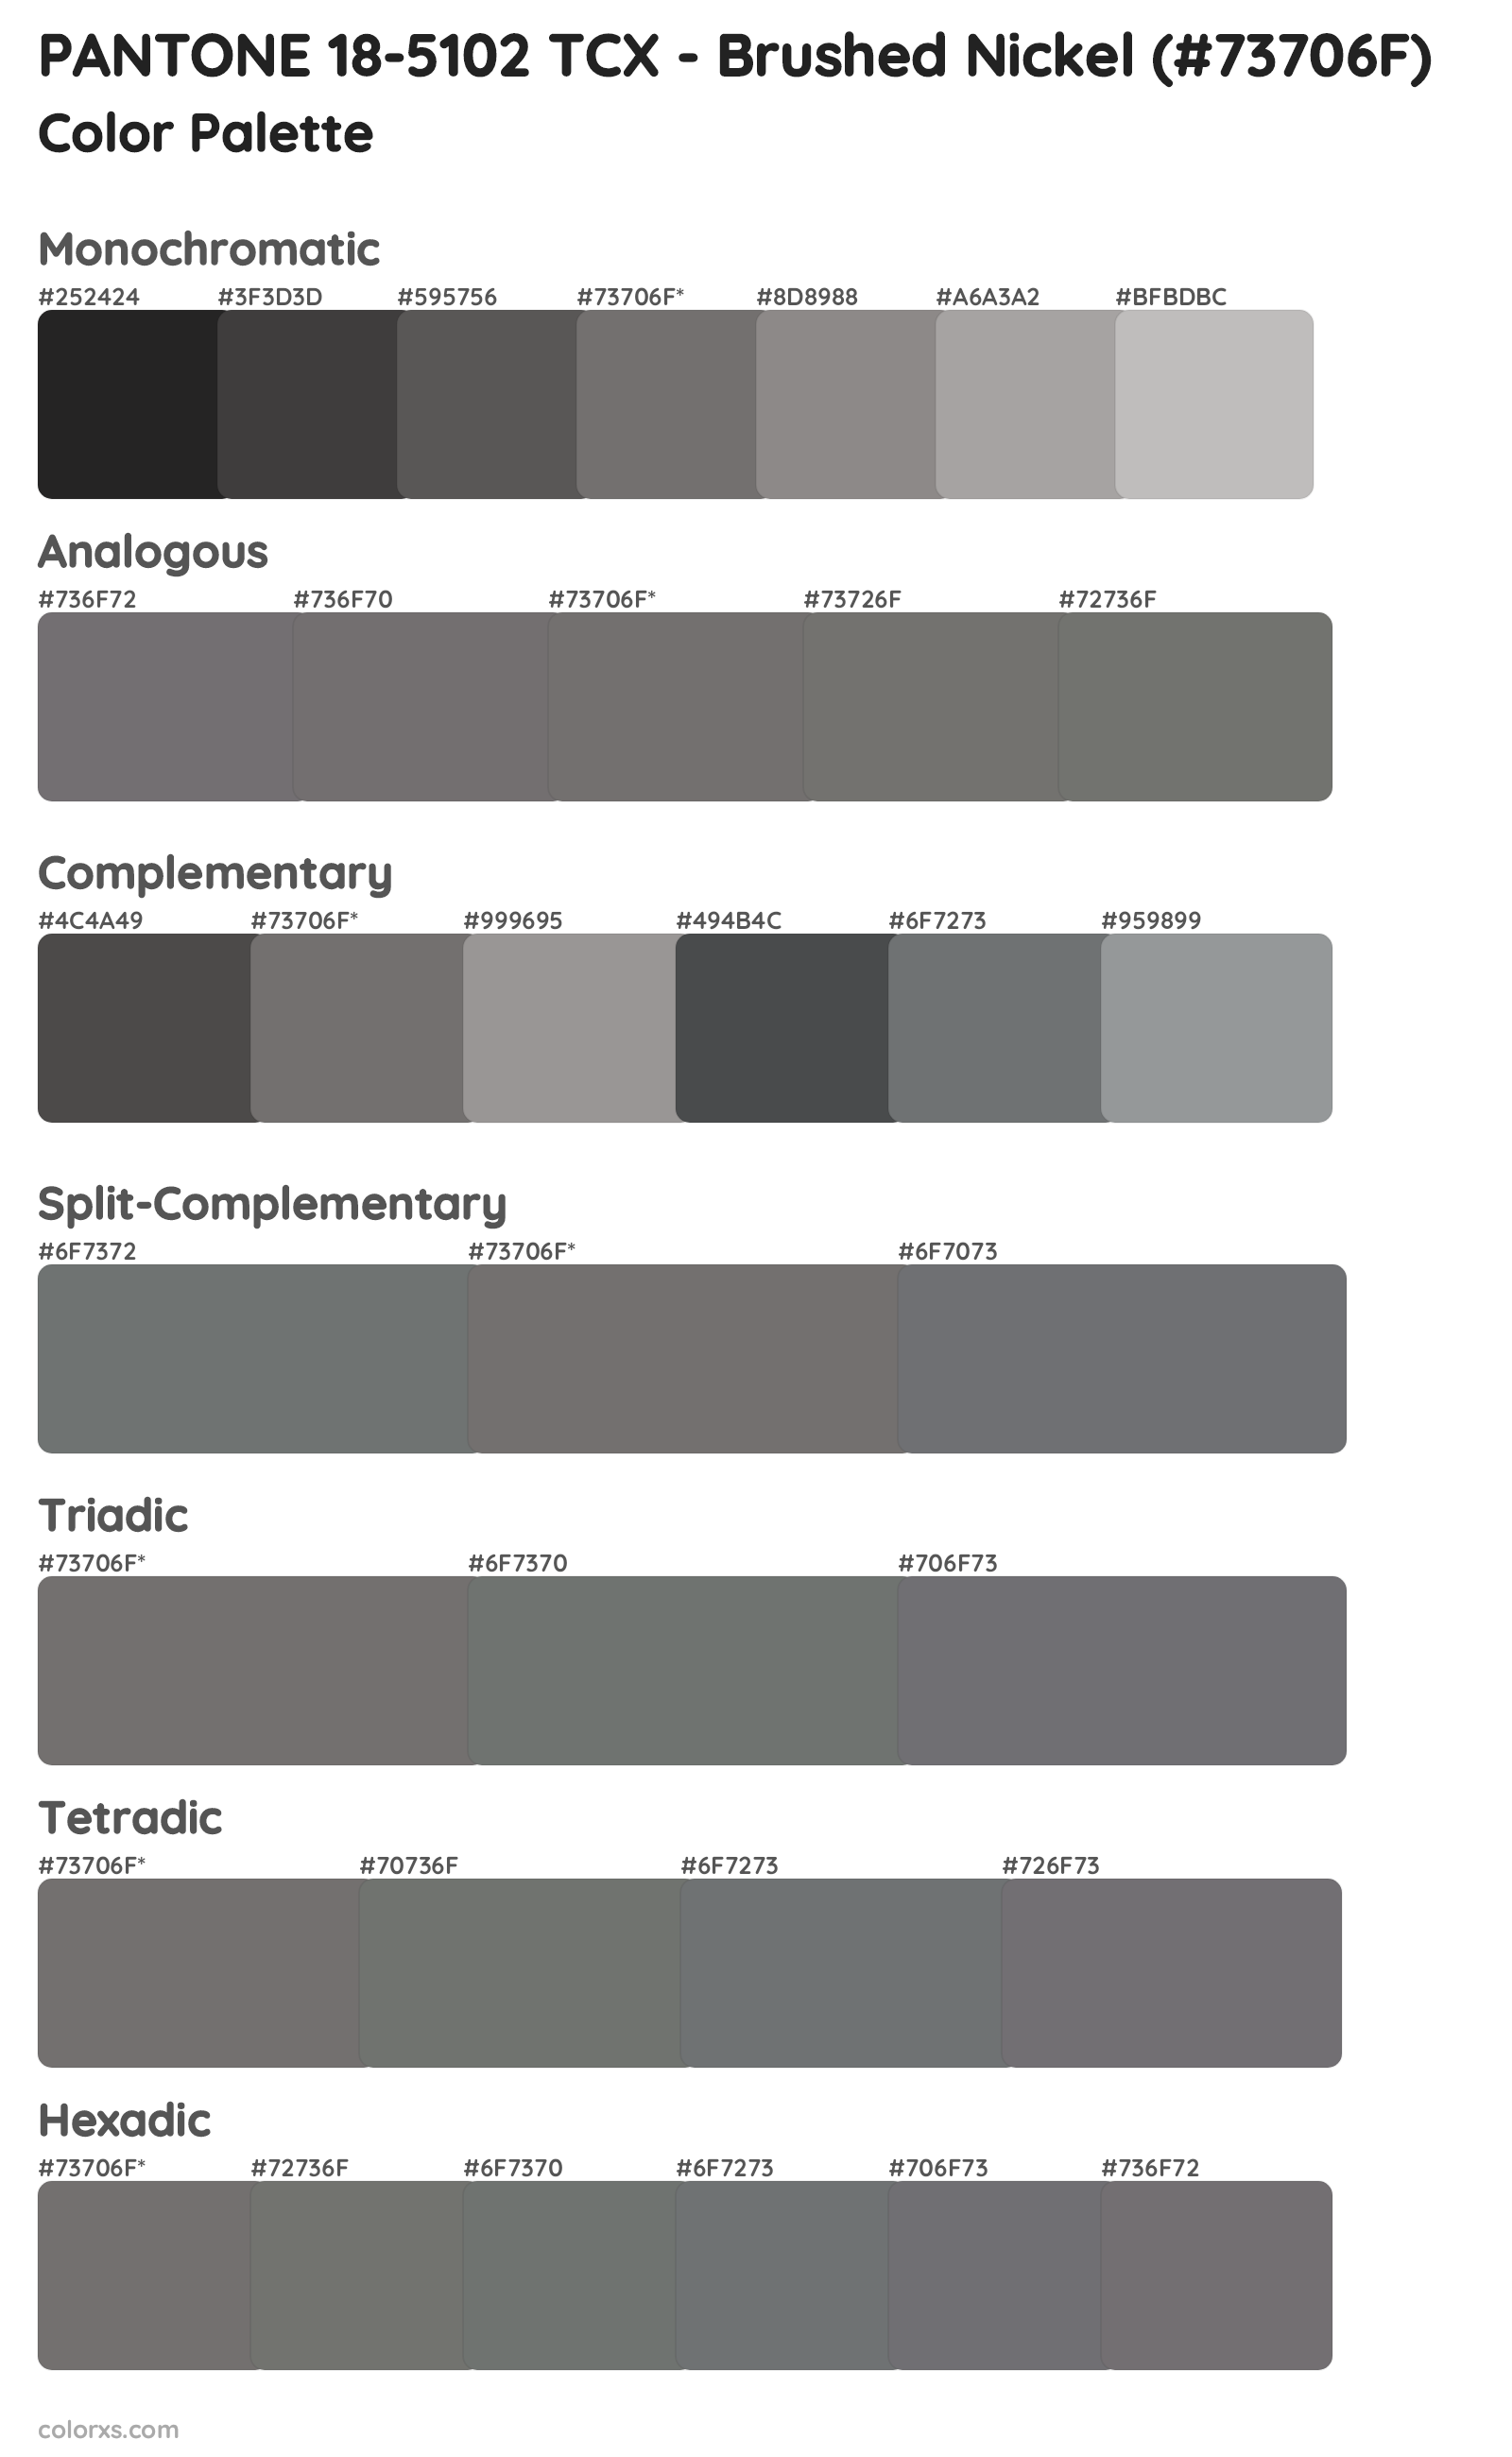 PANTONE 18-5102 TCX - Brushed Nickel Color Scheme Palettes